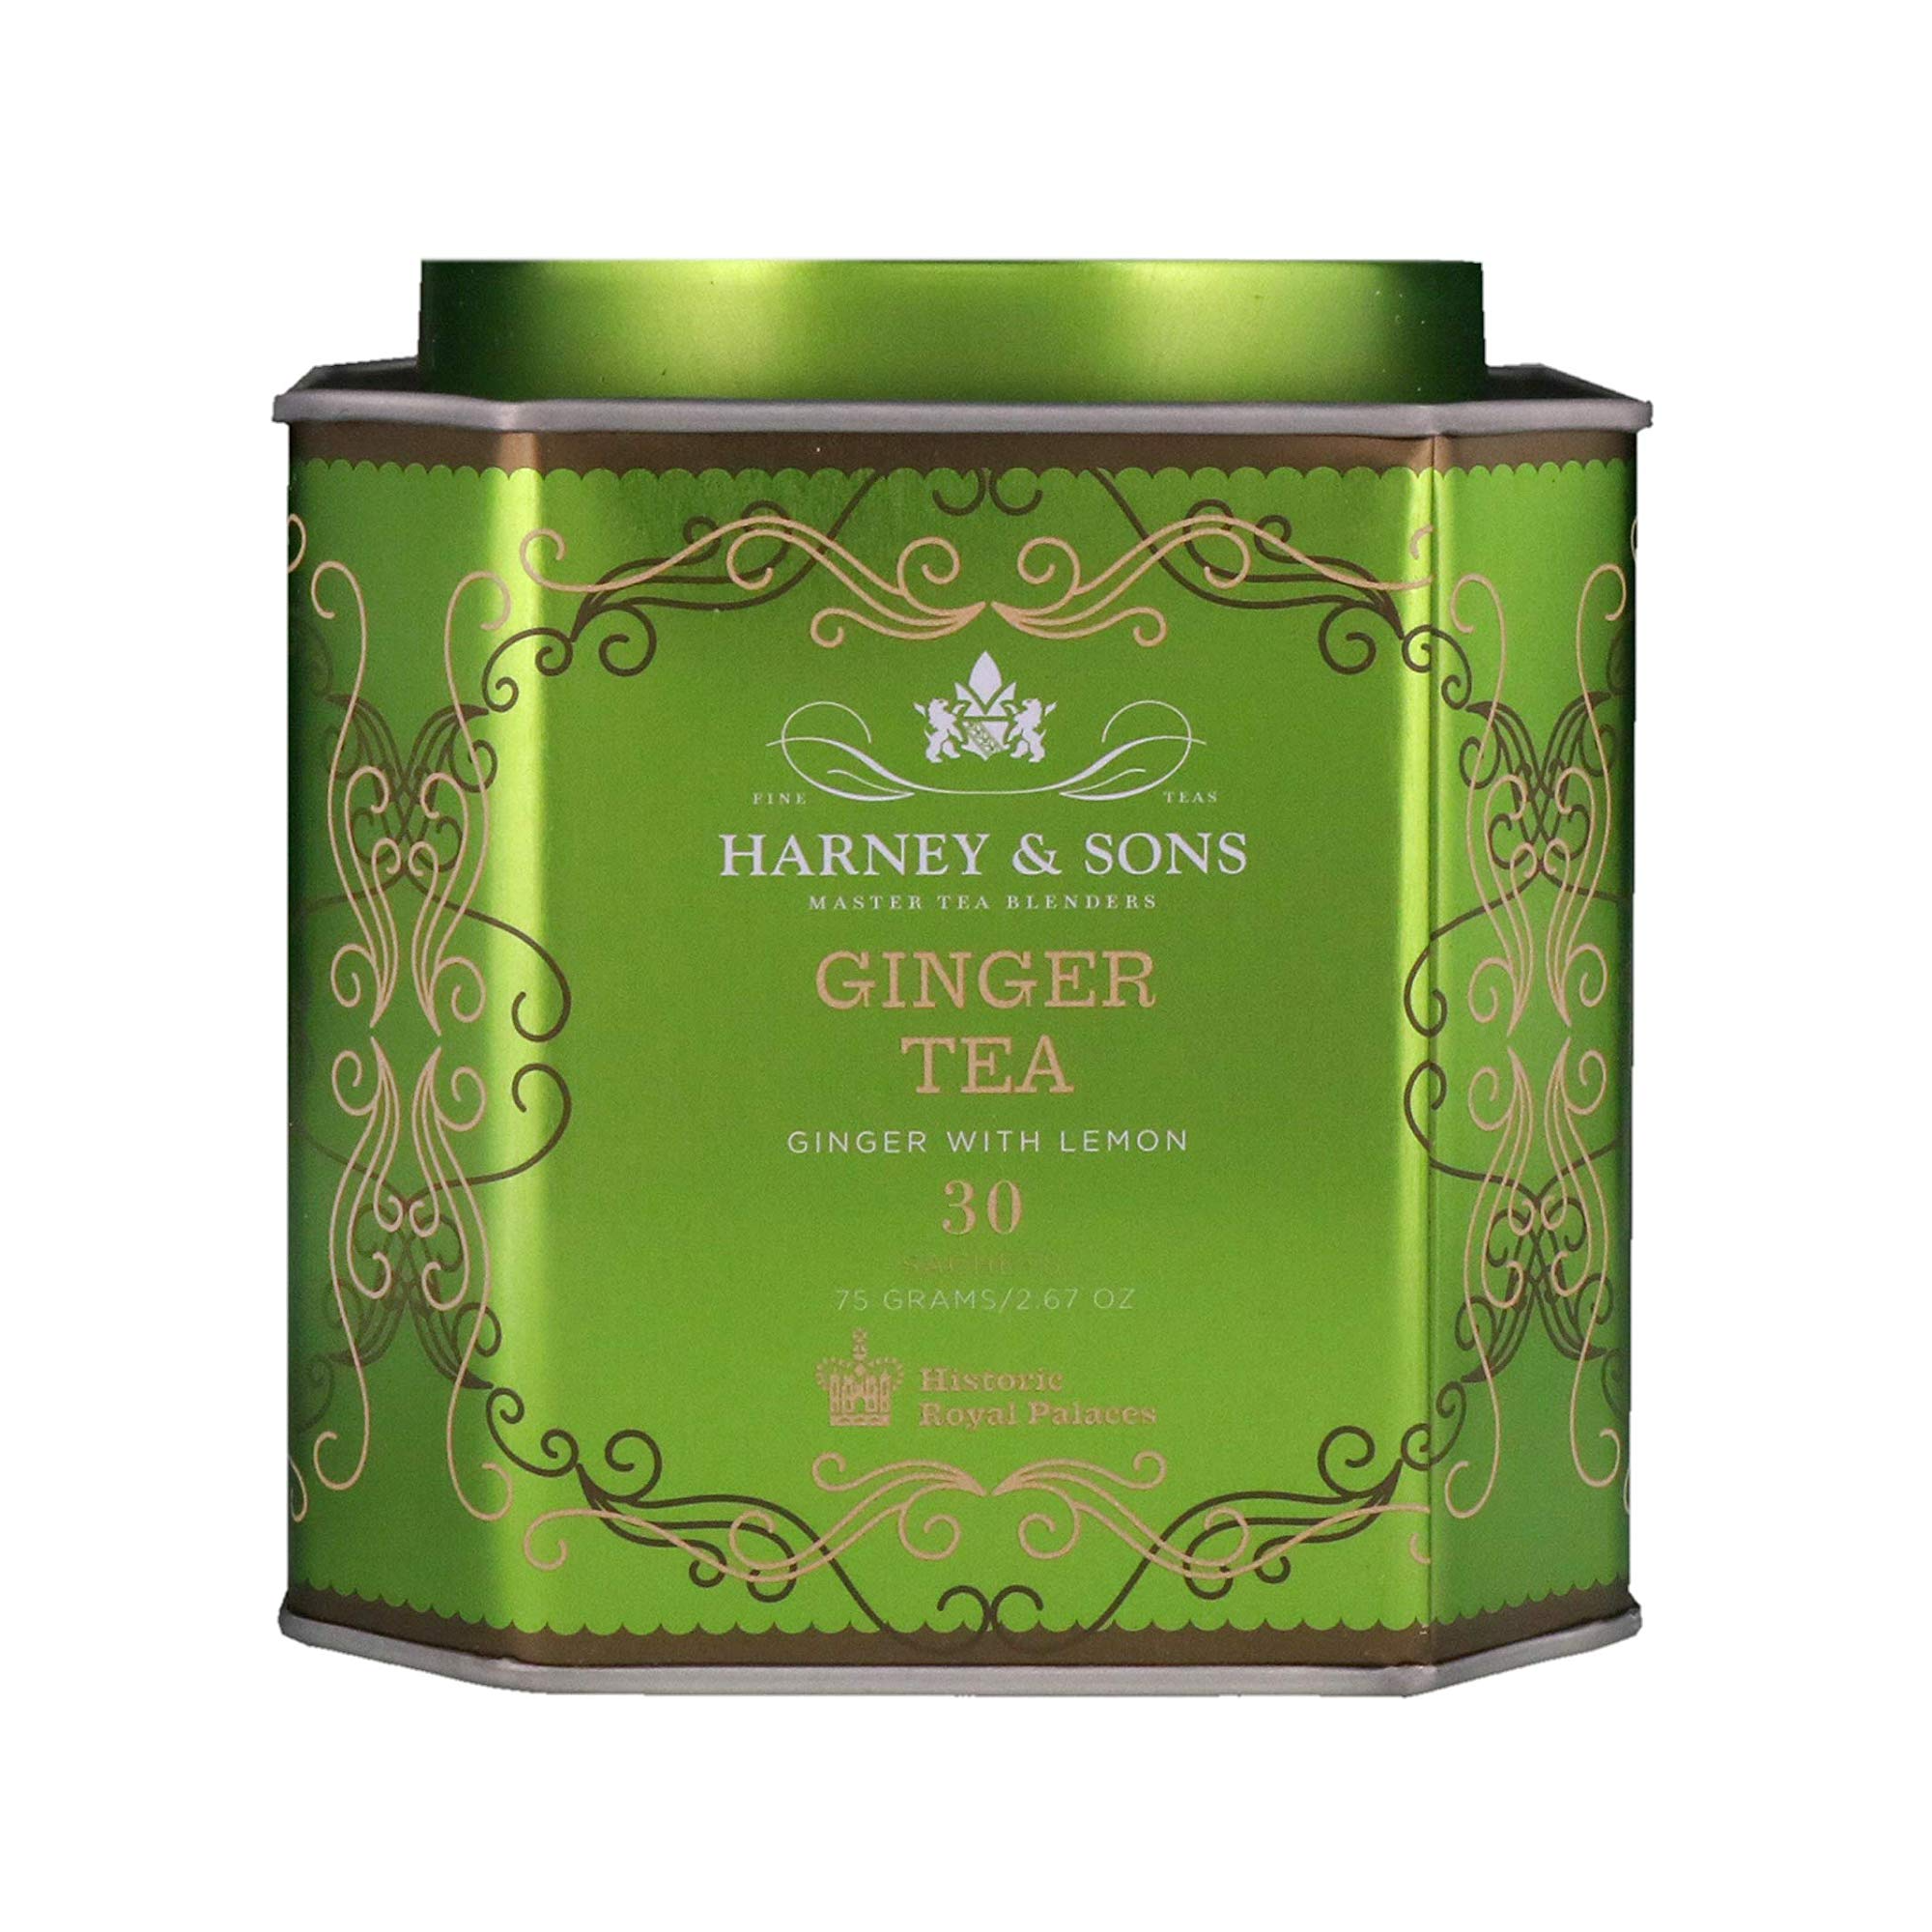 Harney & Sons Ginger Tea Ginger